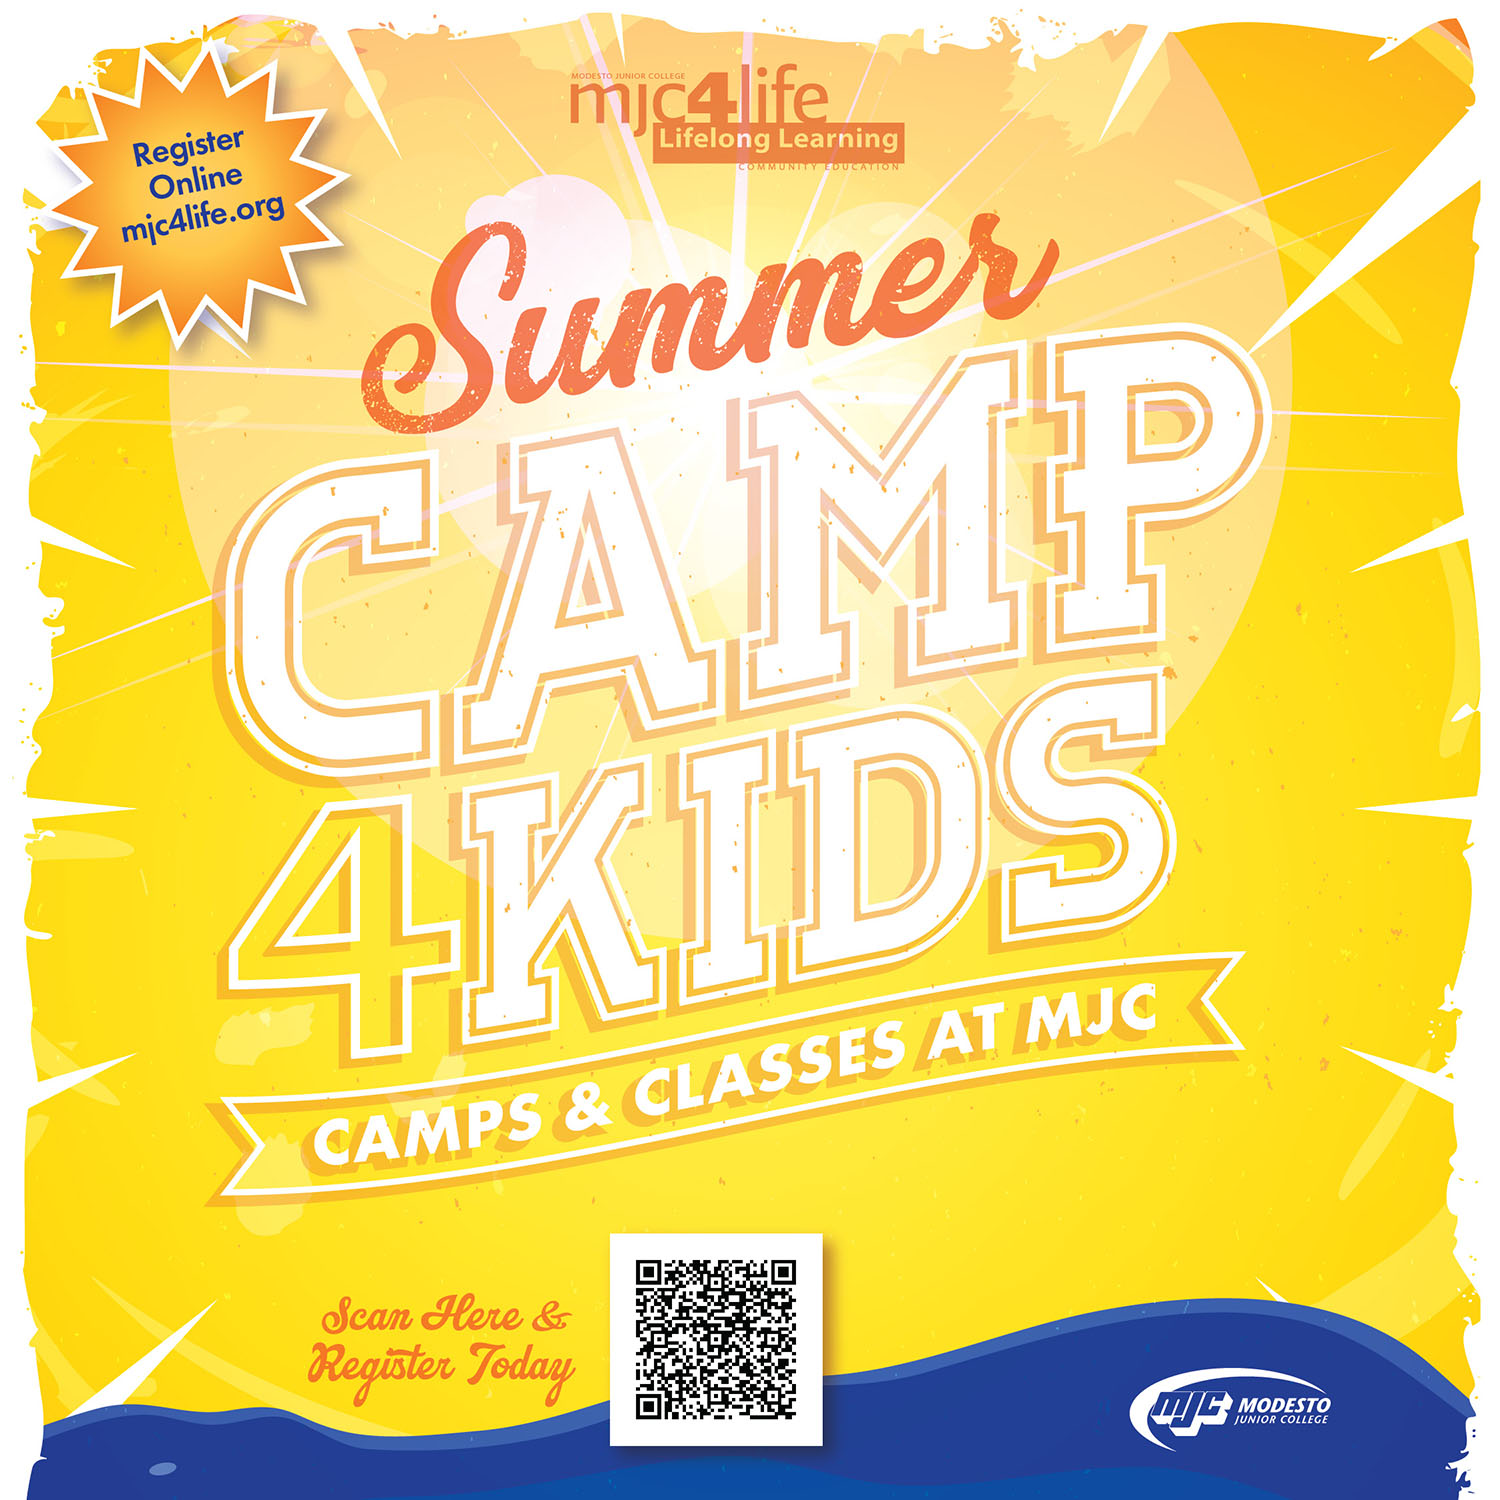 MJC Summer Camp for Kids